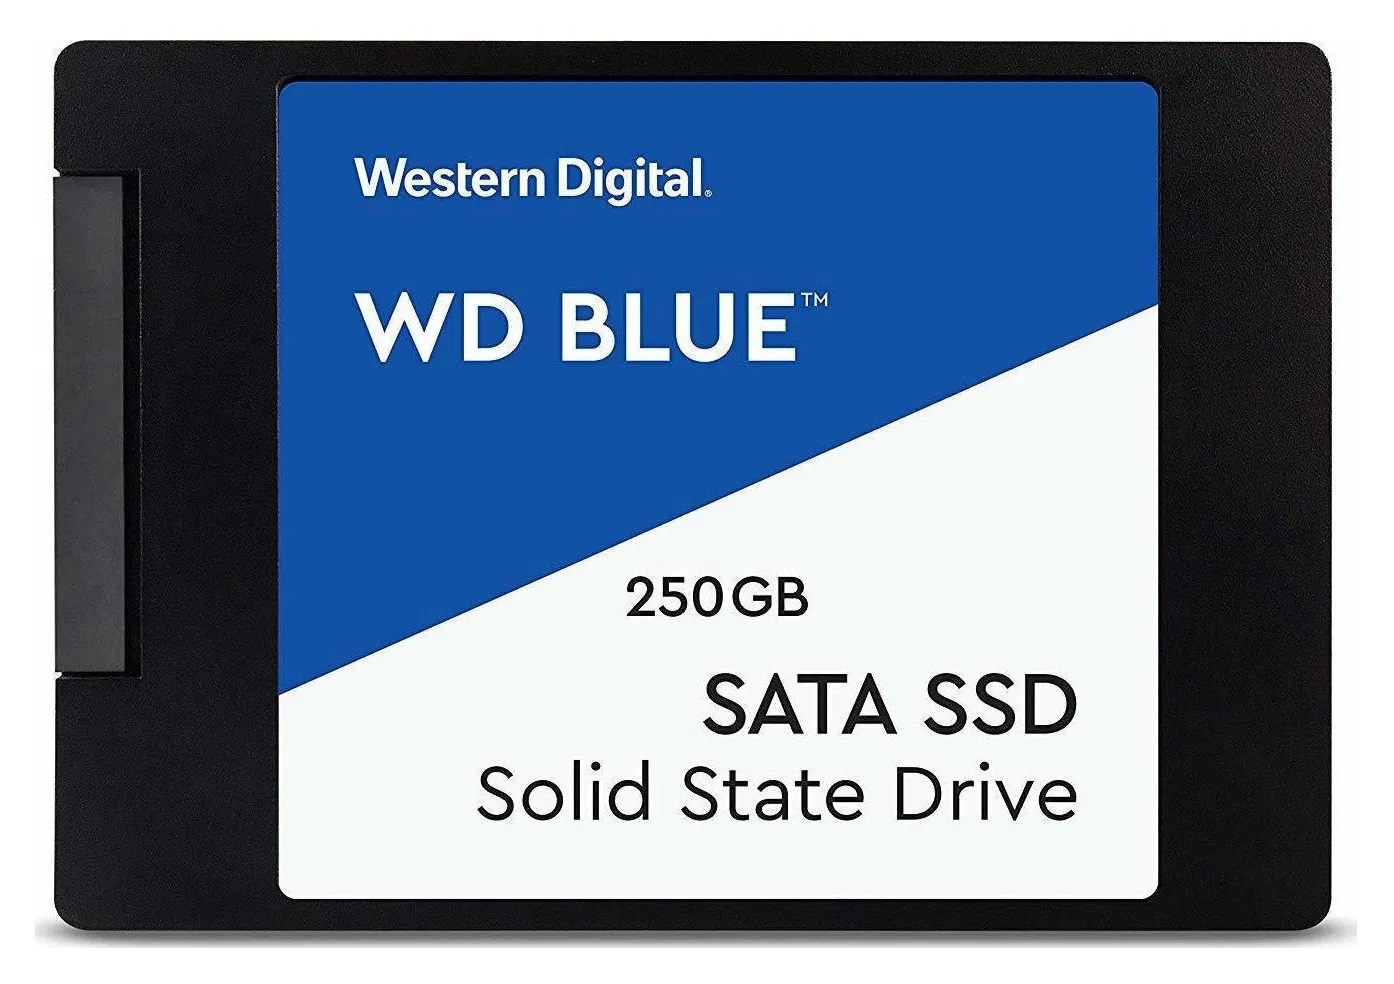 Marvell主控SSD数据恢复难点-PC3000 SSD恢复Sandisk Ultra II, SSD Plus和WD Blue (Marvell CPU)-图片3